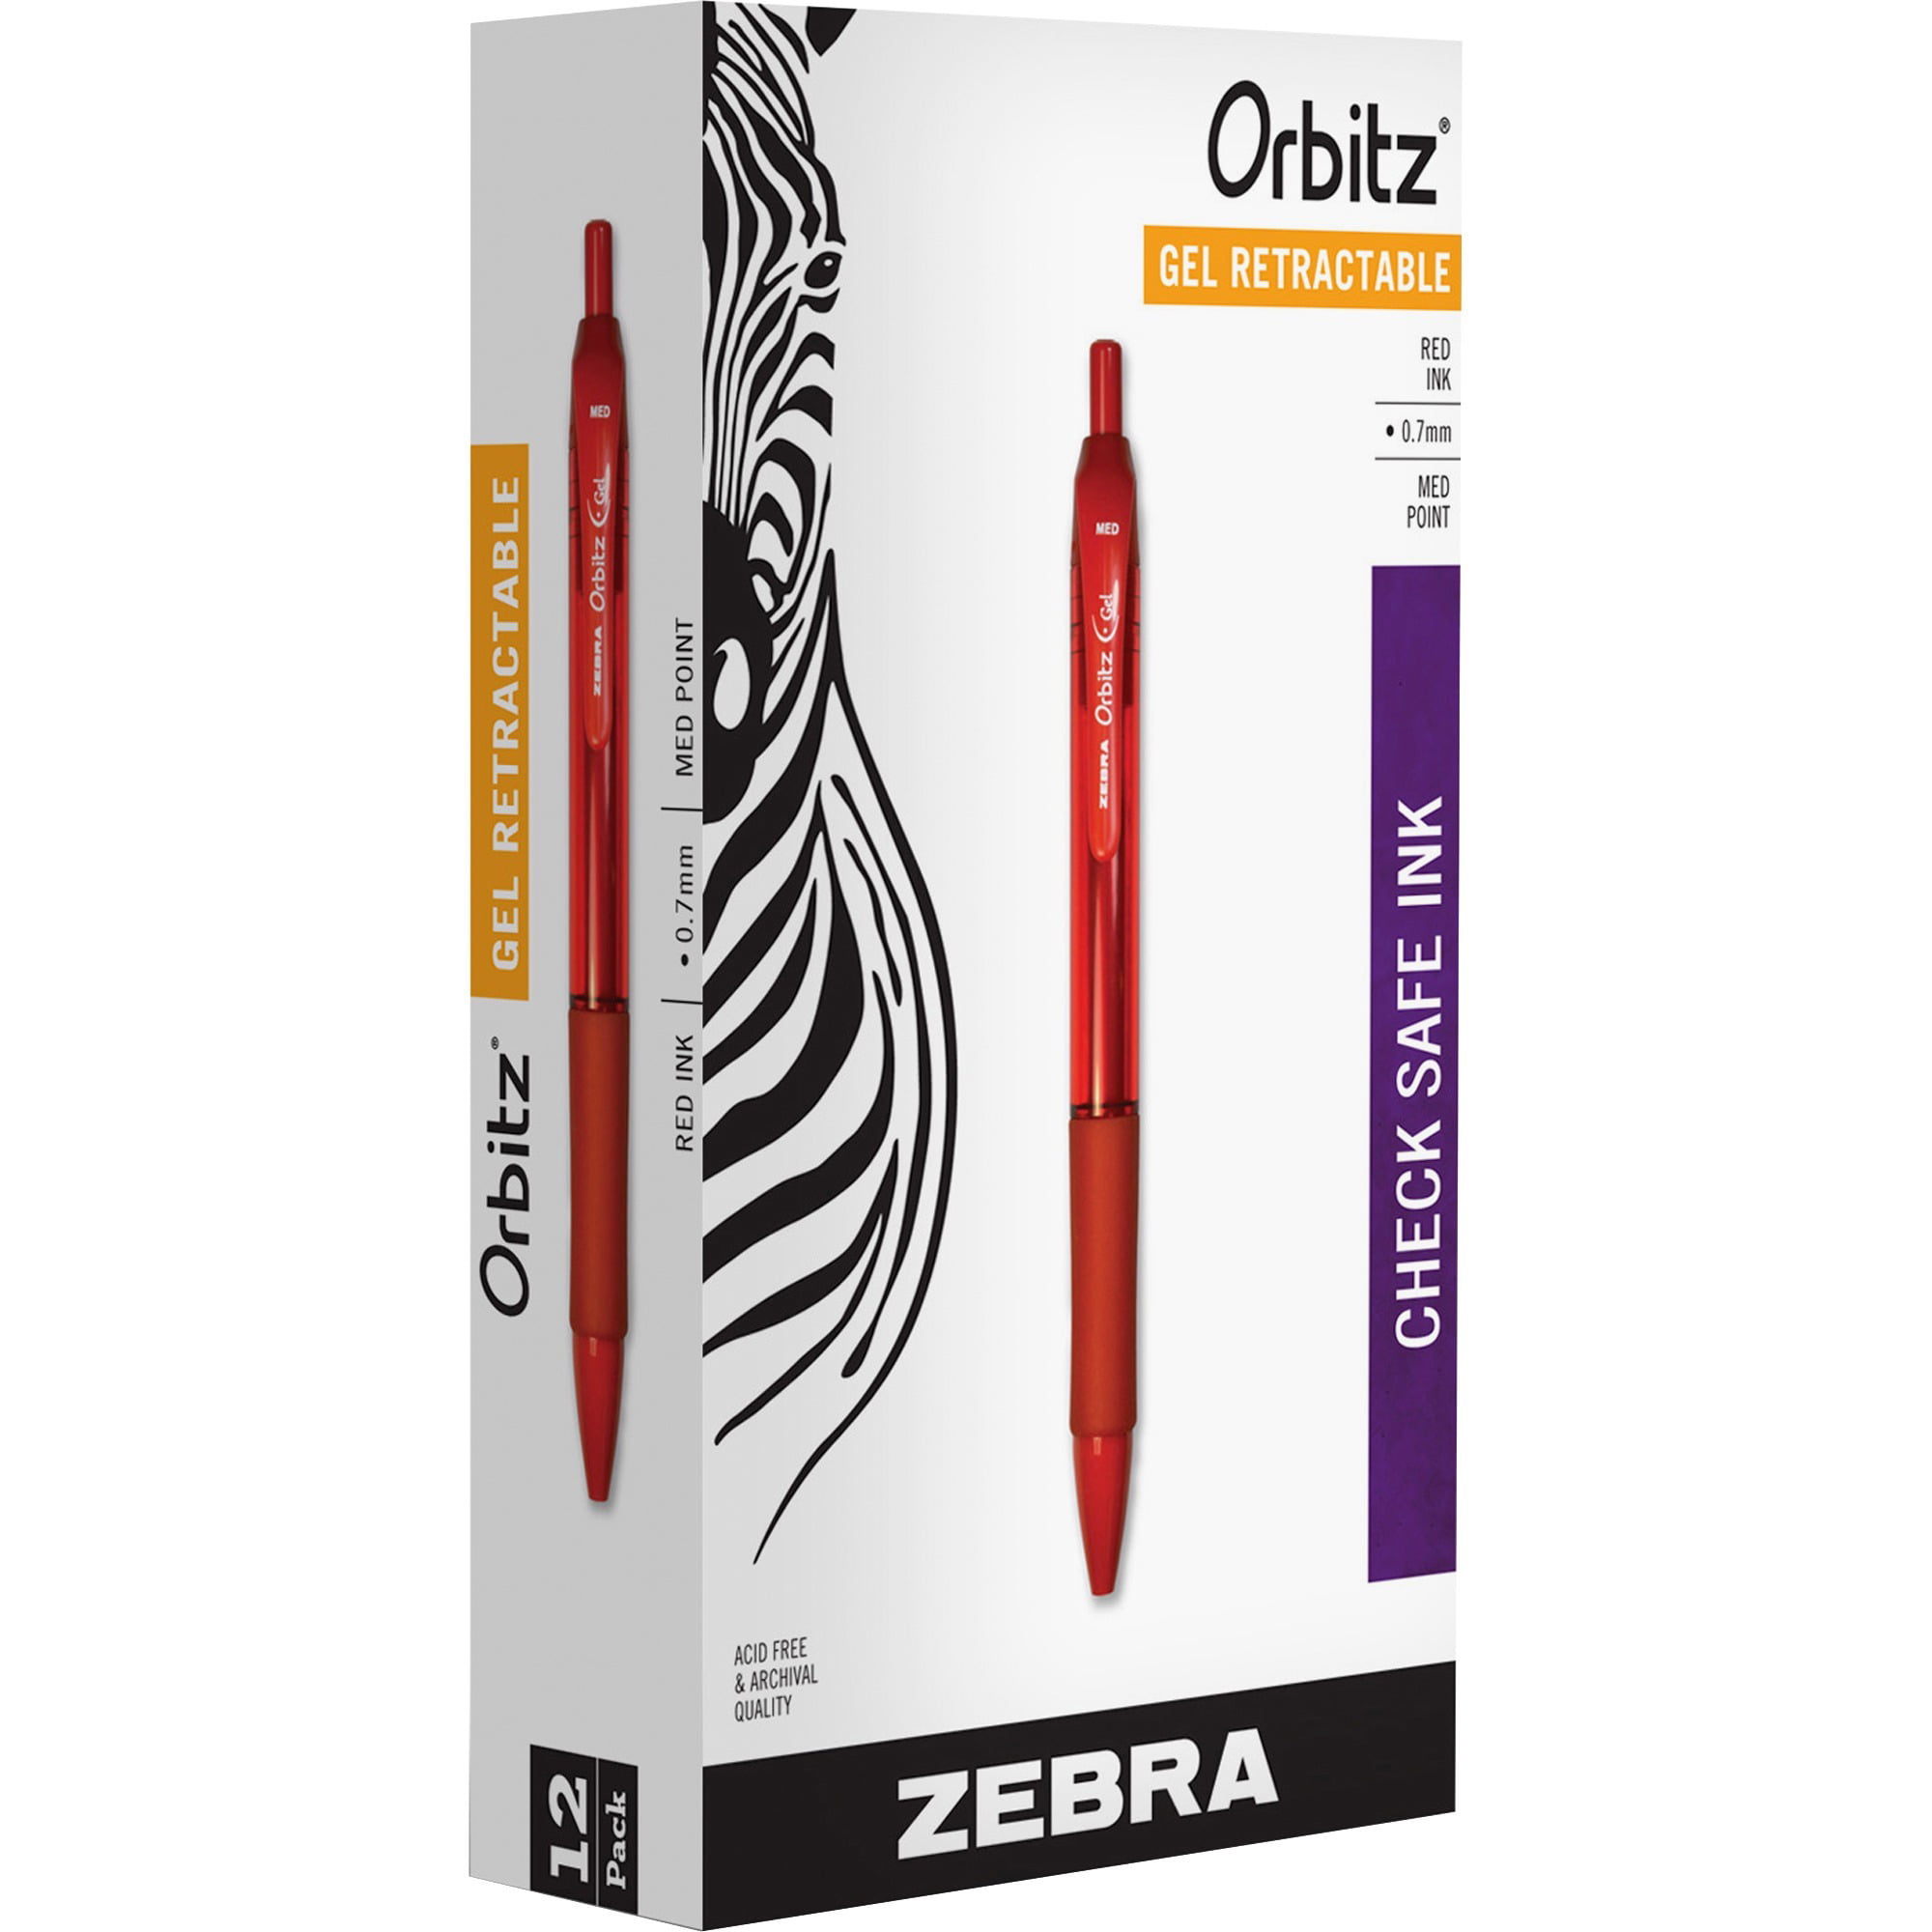 Zebra sarasa clip 1.0mm gel ink rollerball refills 1 Pen + 5 Refills Details about    Red 